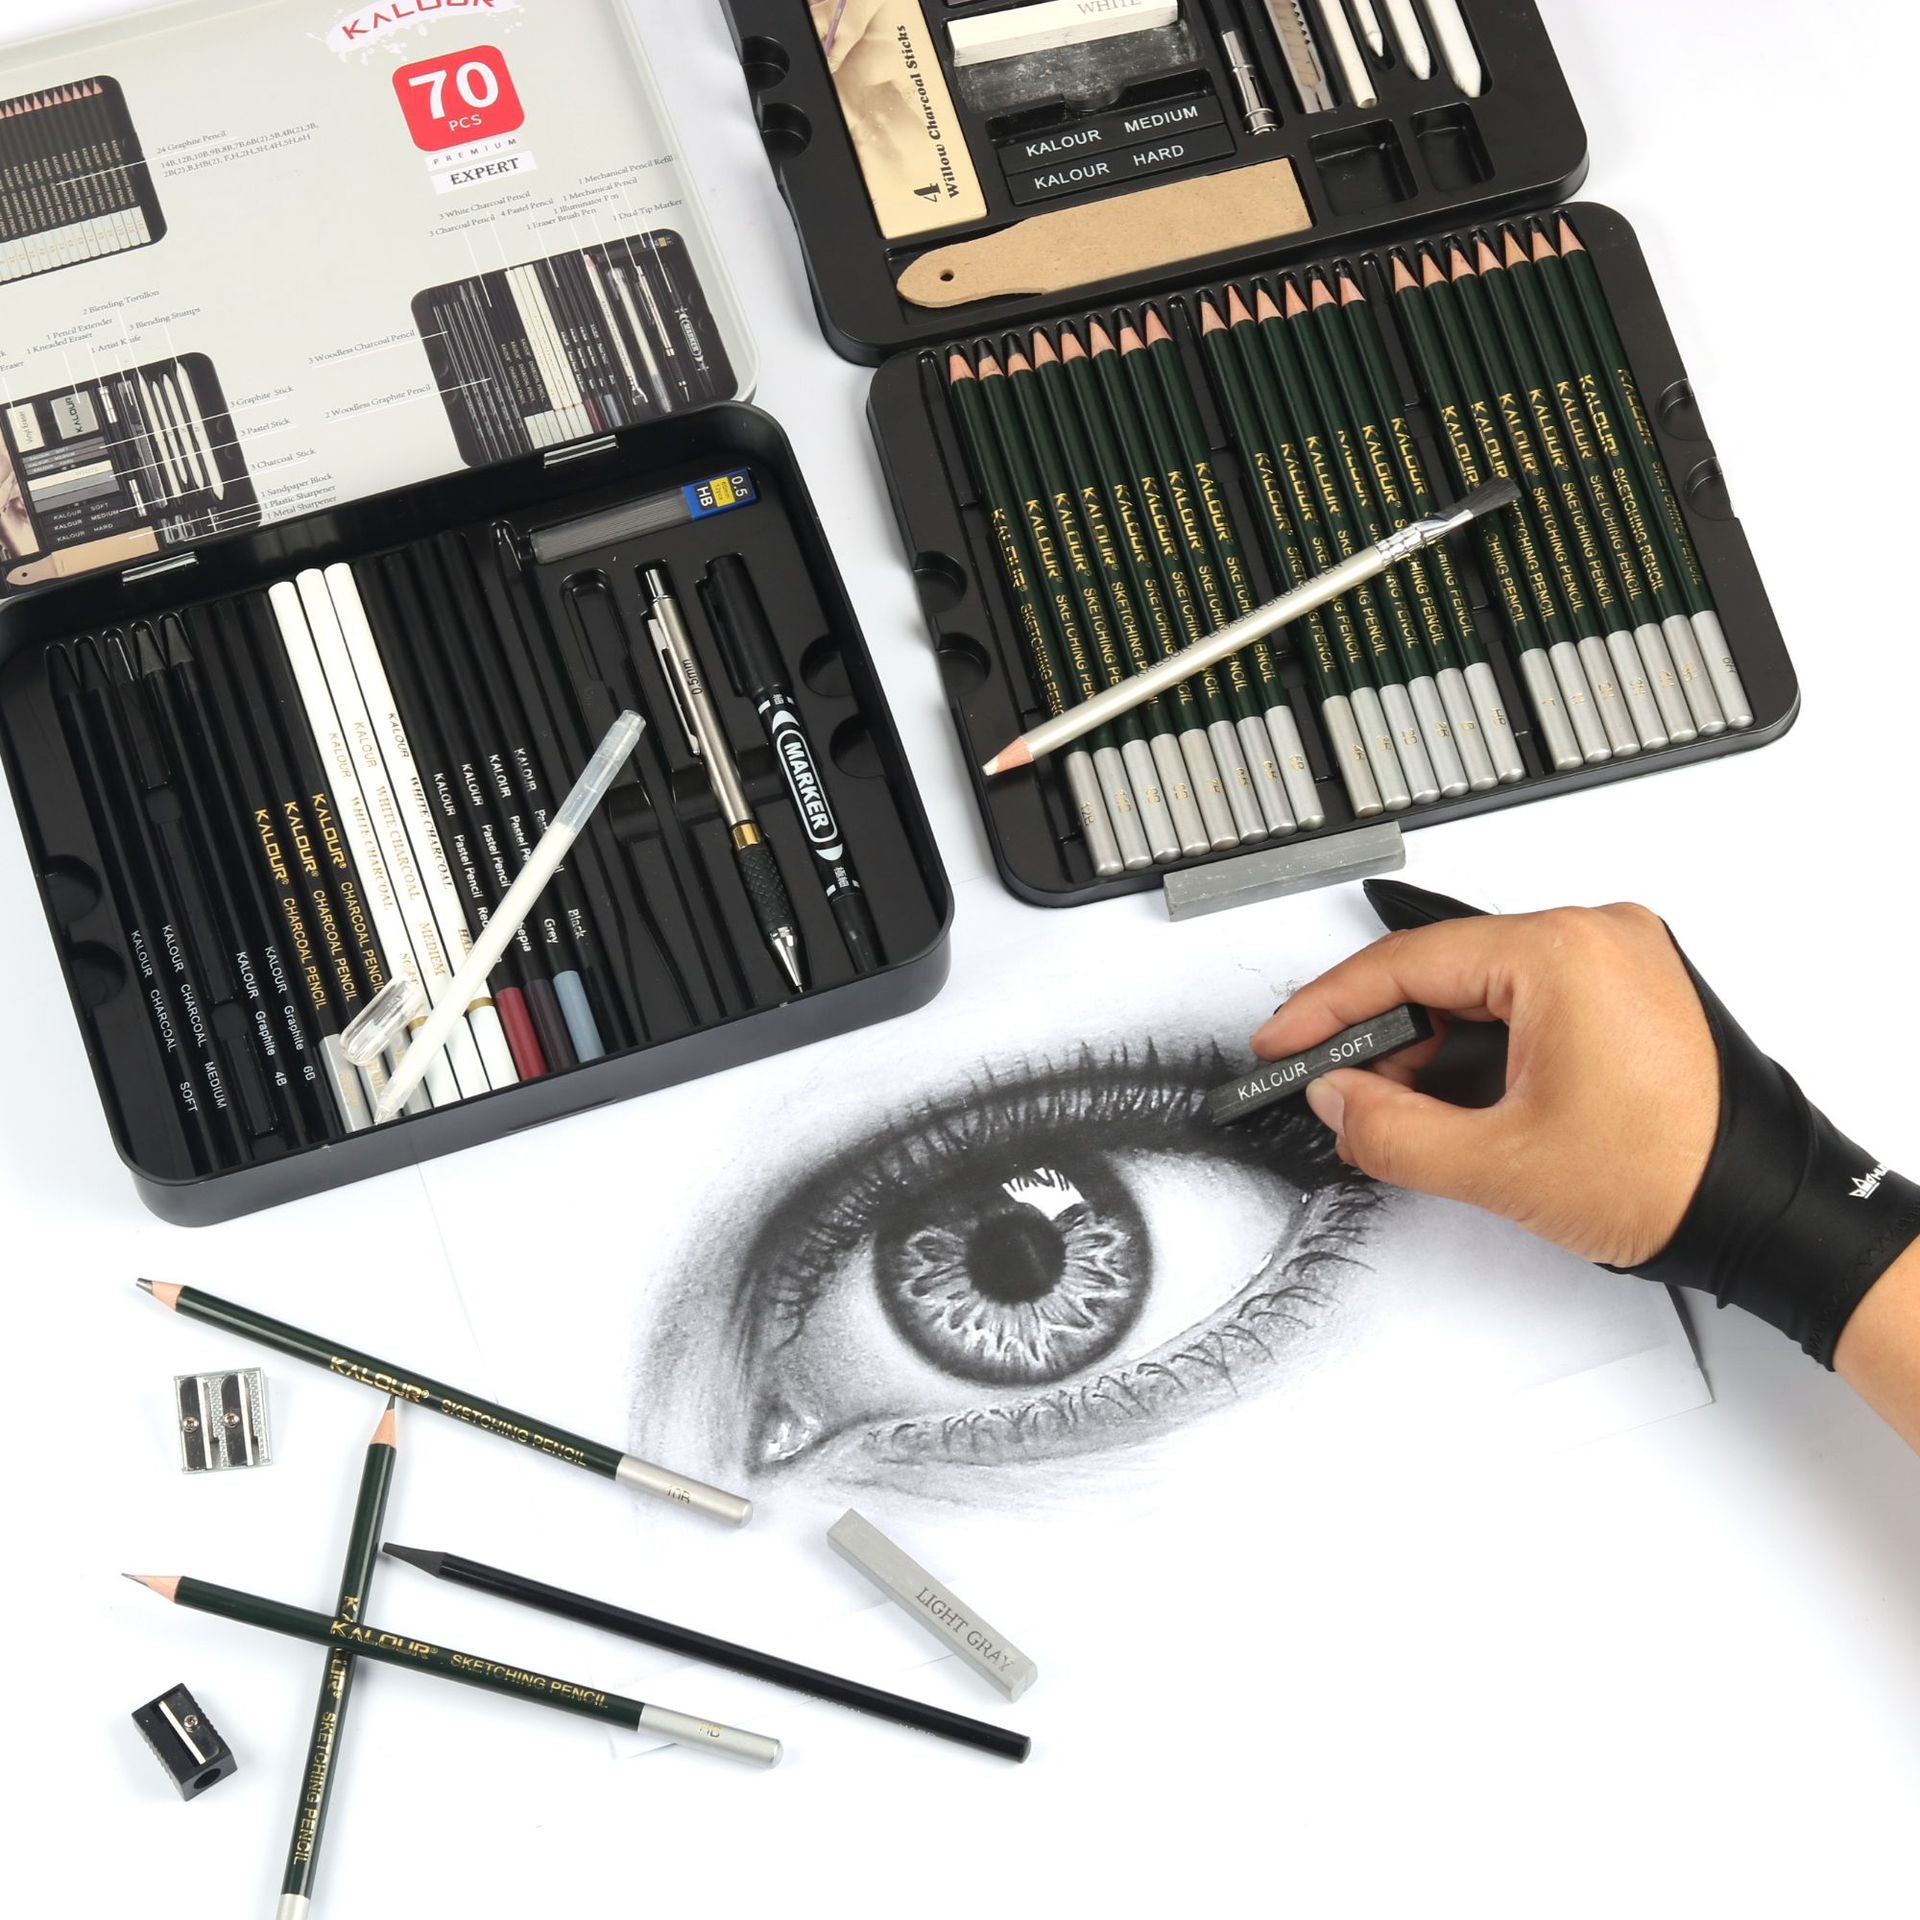 KALOUR 70 Pack Art Supplies Sketching Drawing Pencils Set Tin Box